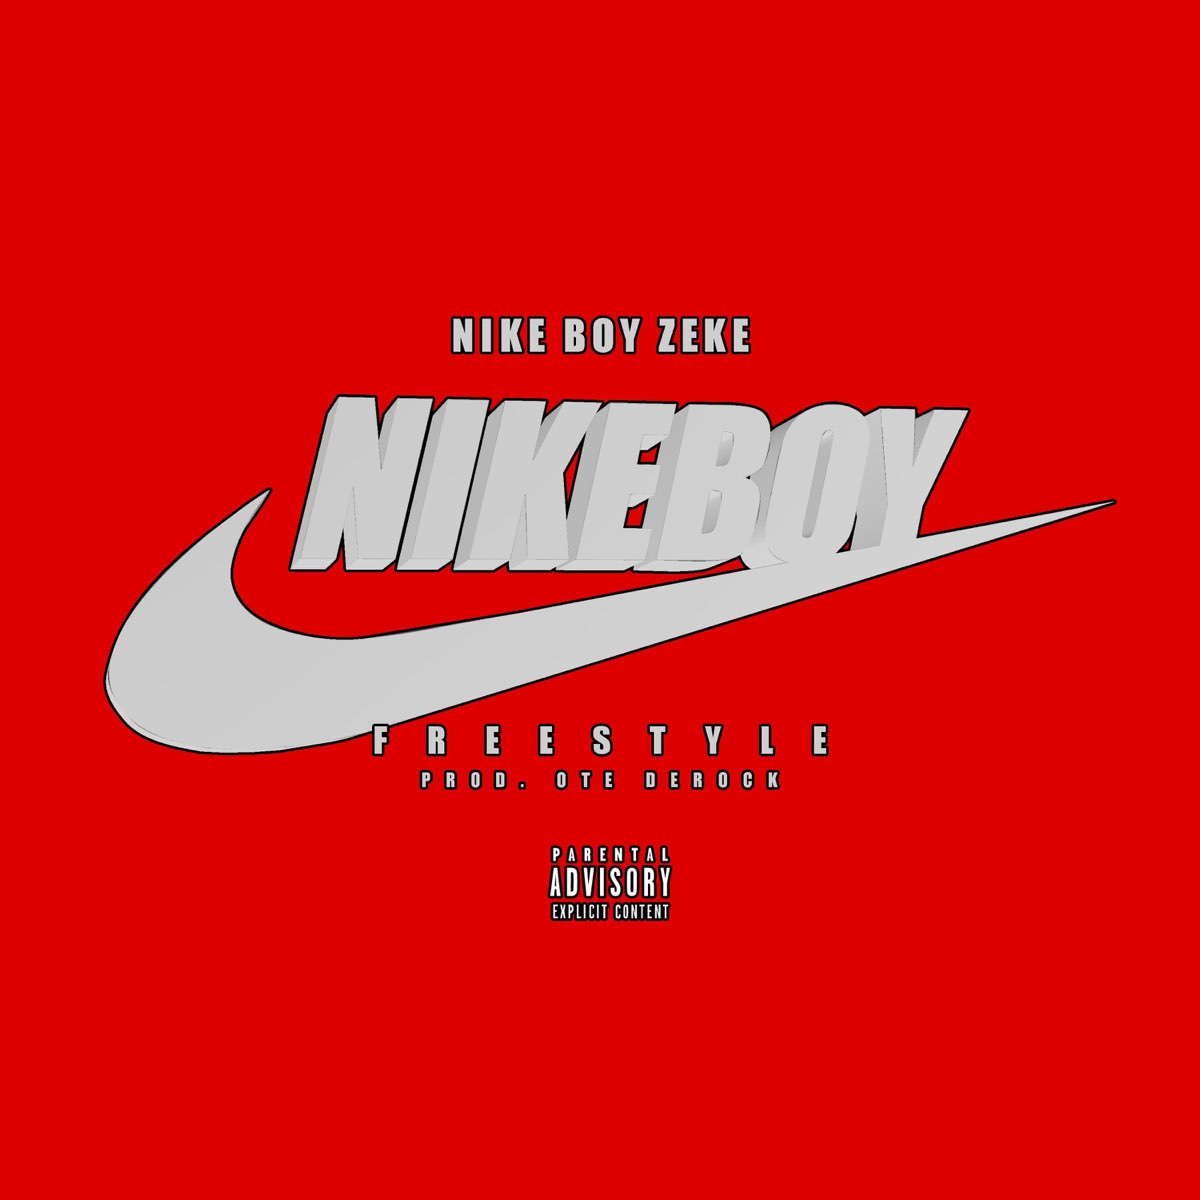 Nikeboy Freestyle - Single by Nikeboy Zeke on Apple Music